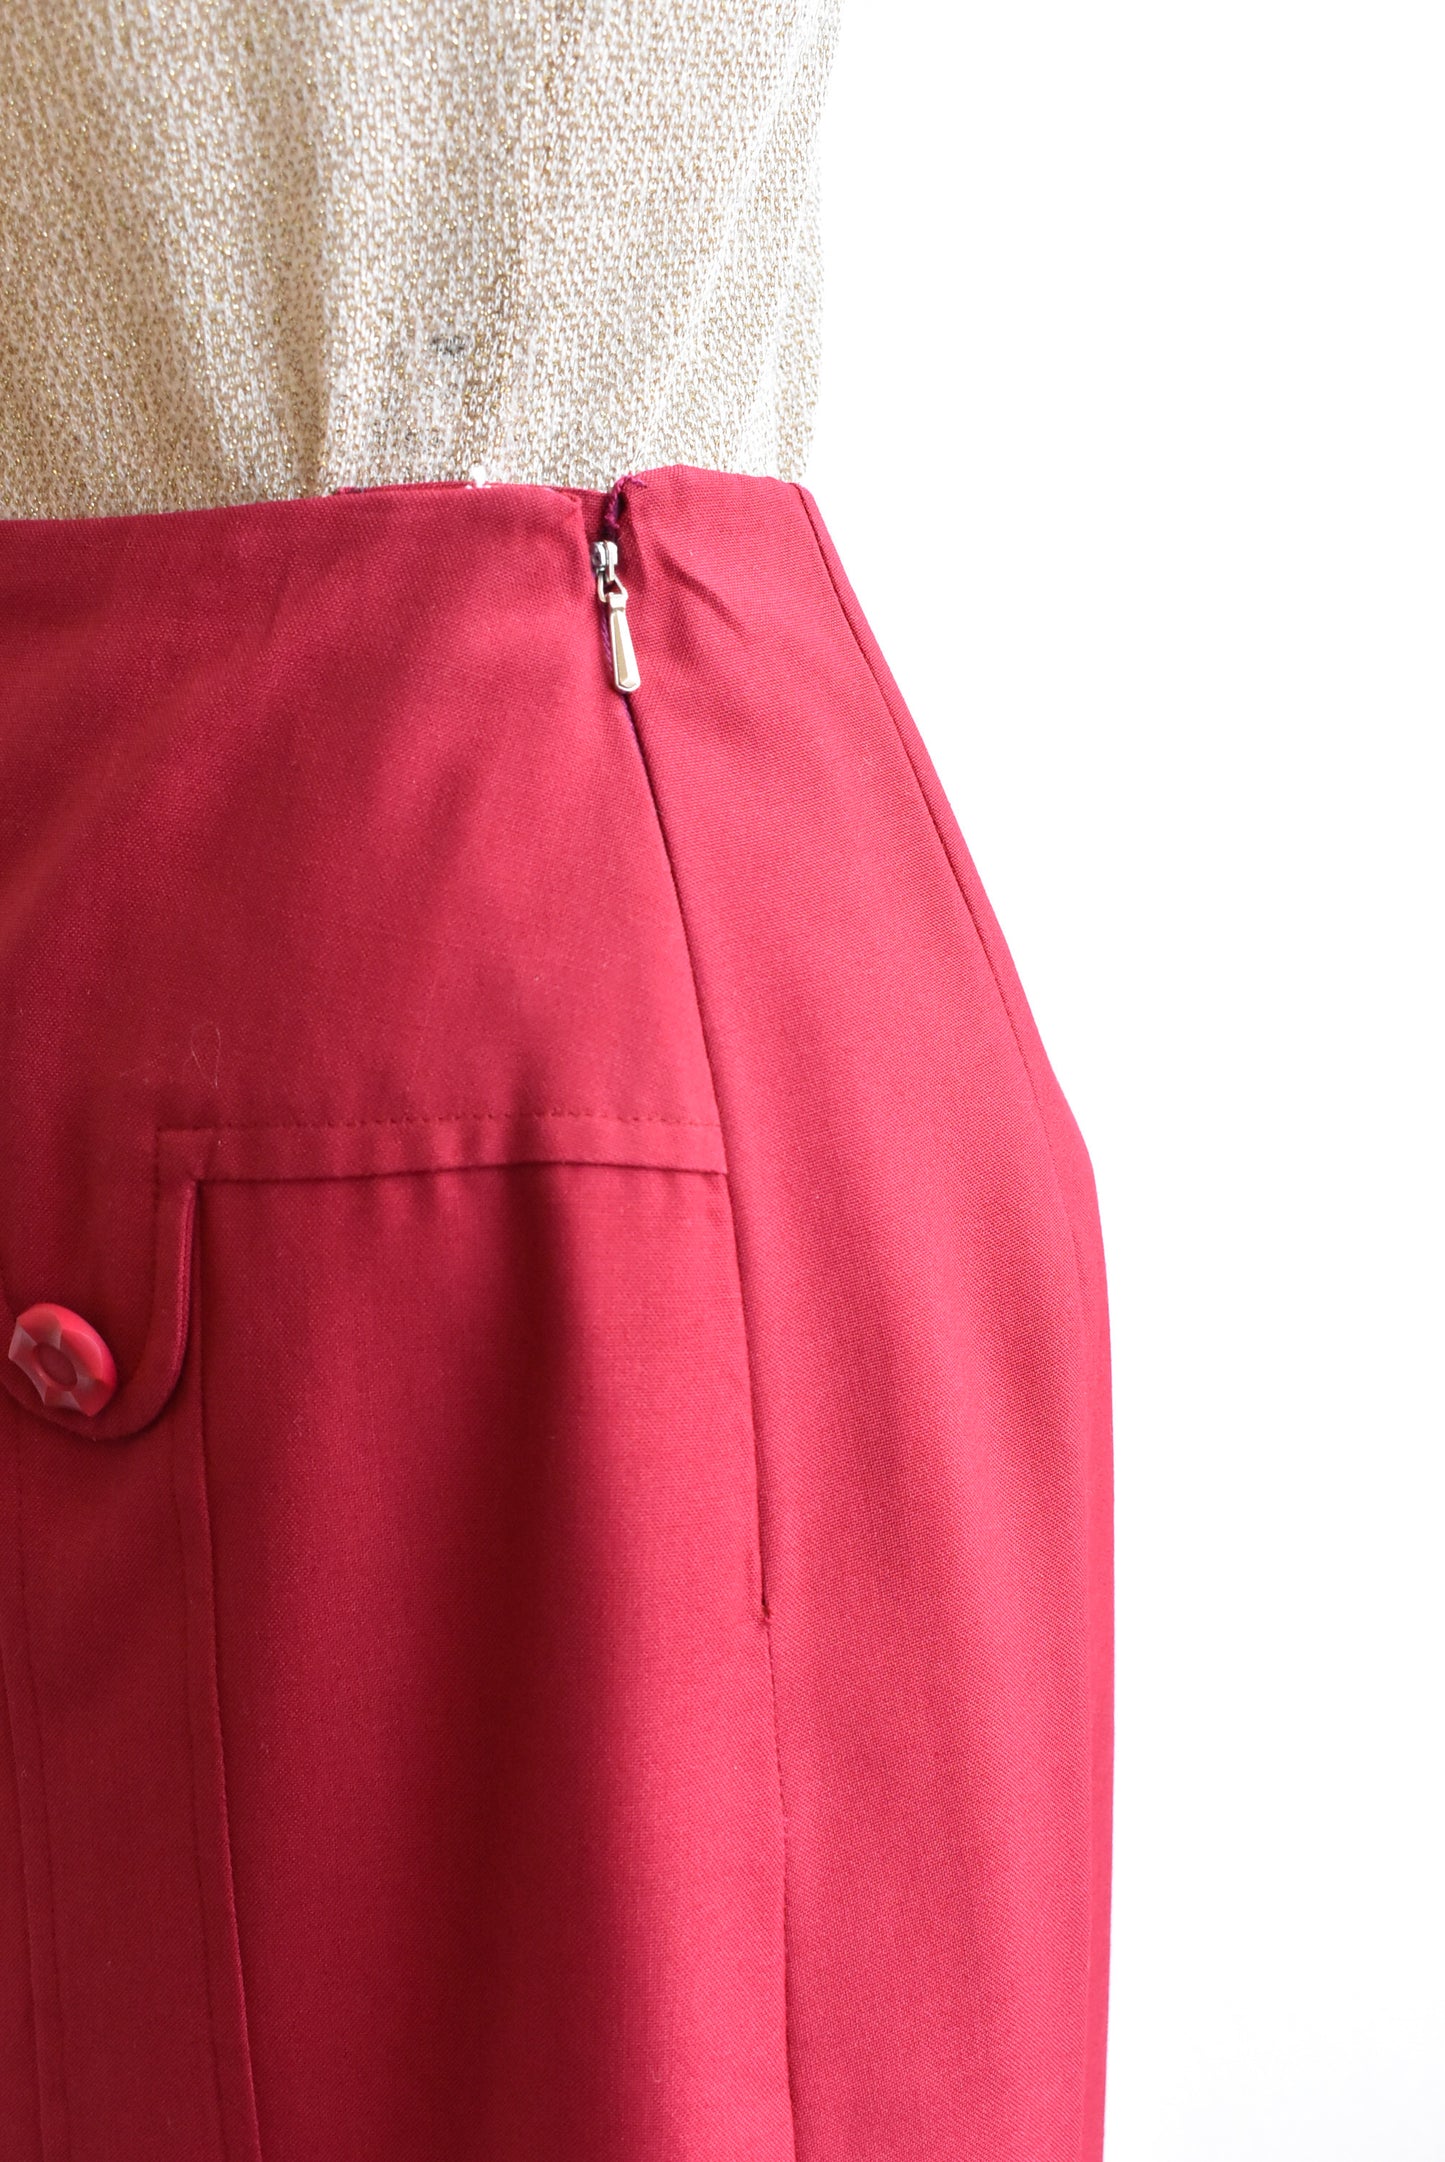 Selby retro burgundy panel pencil skirt